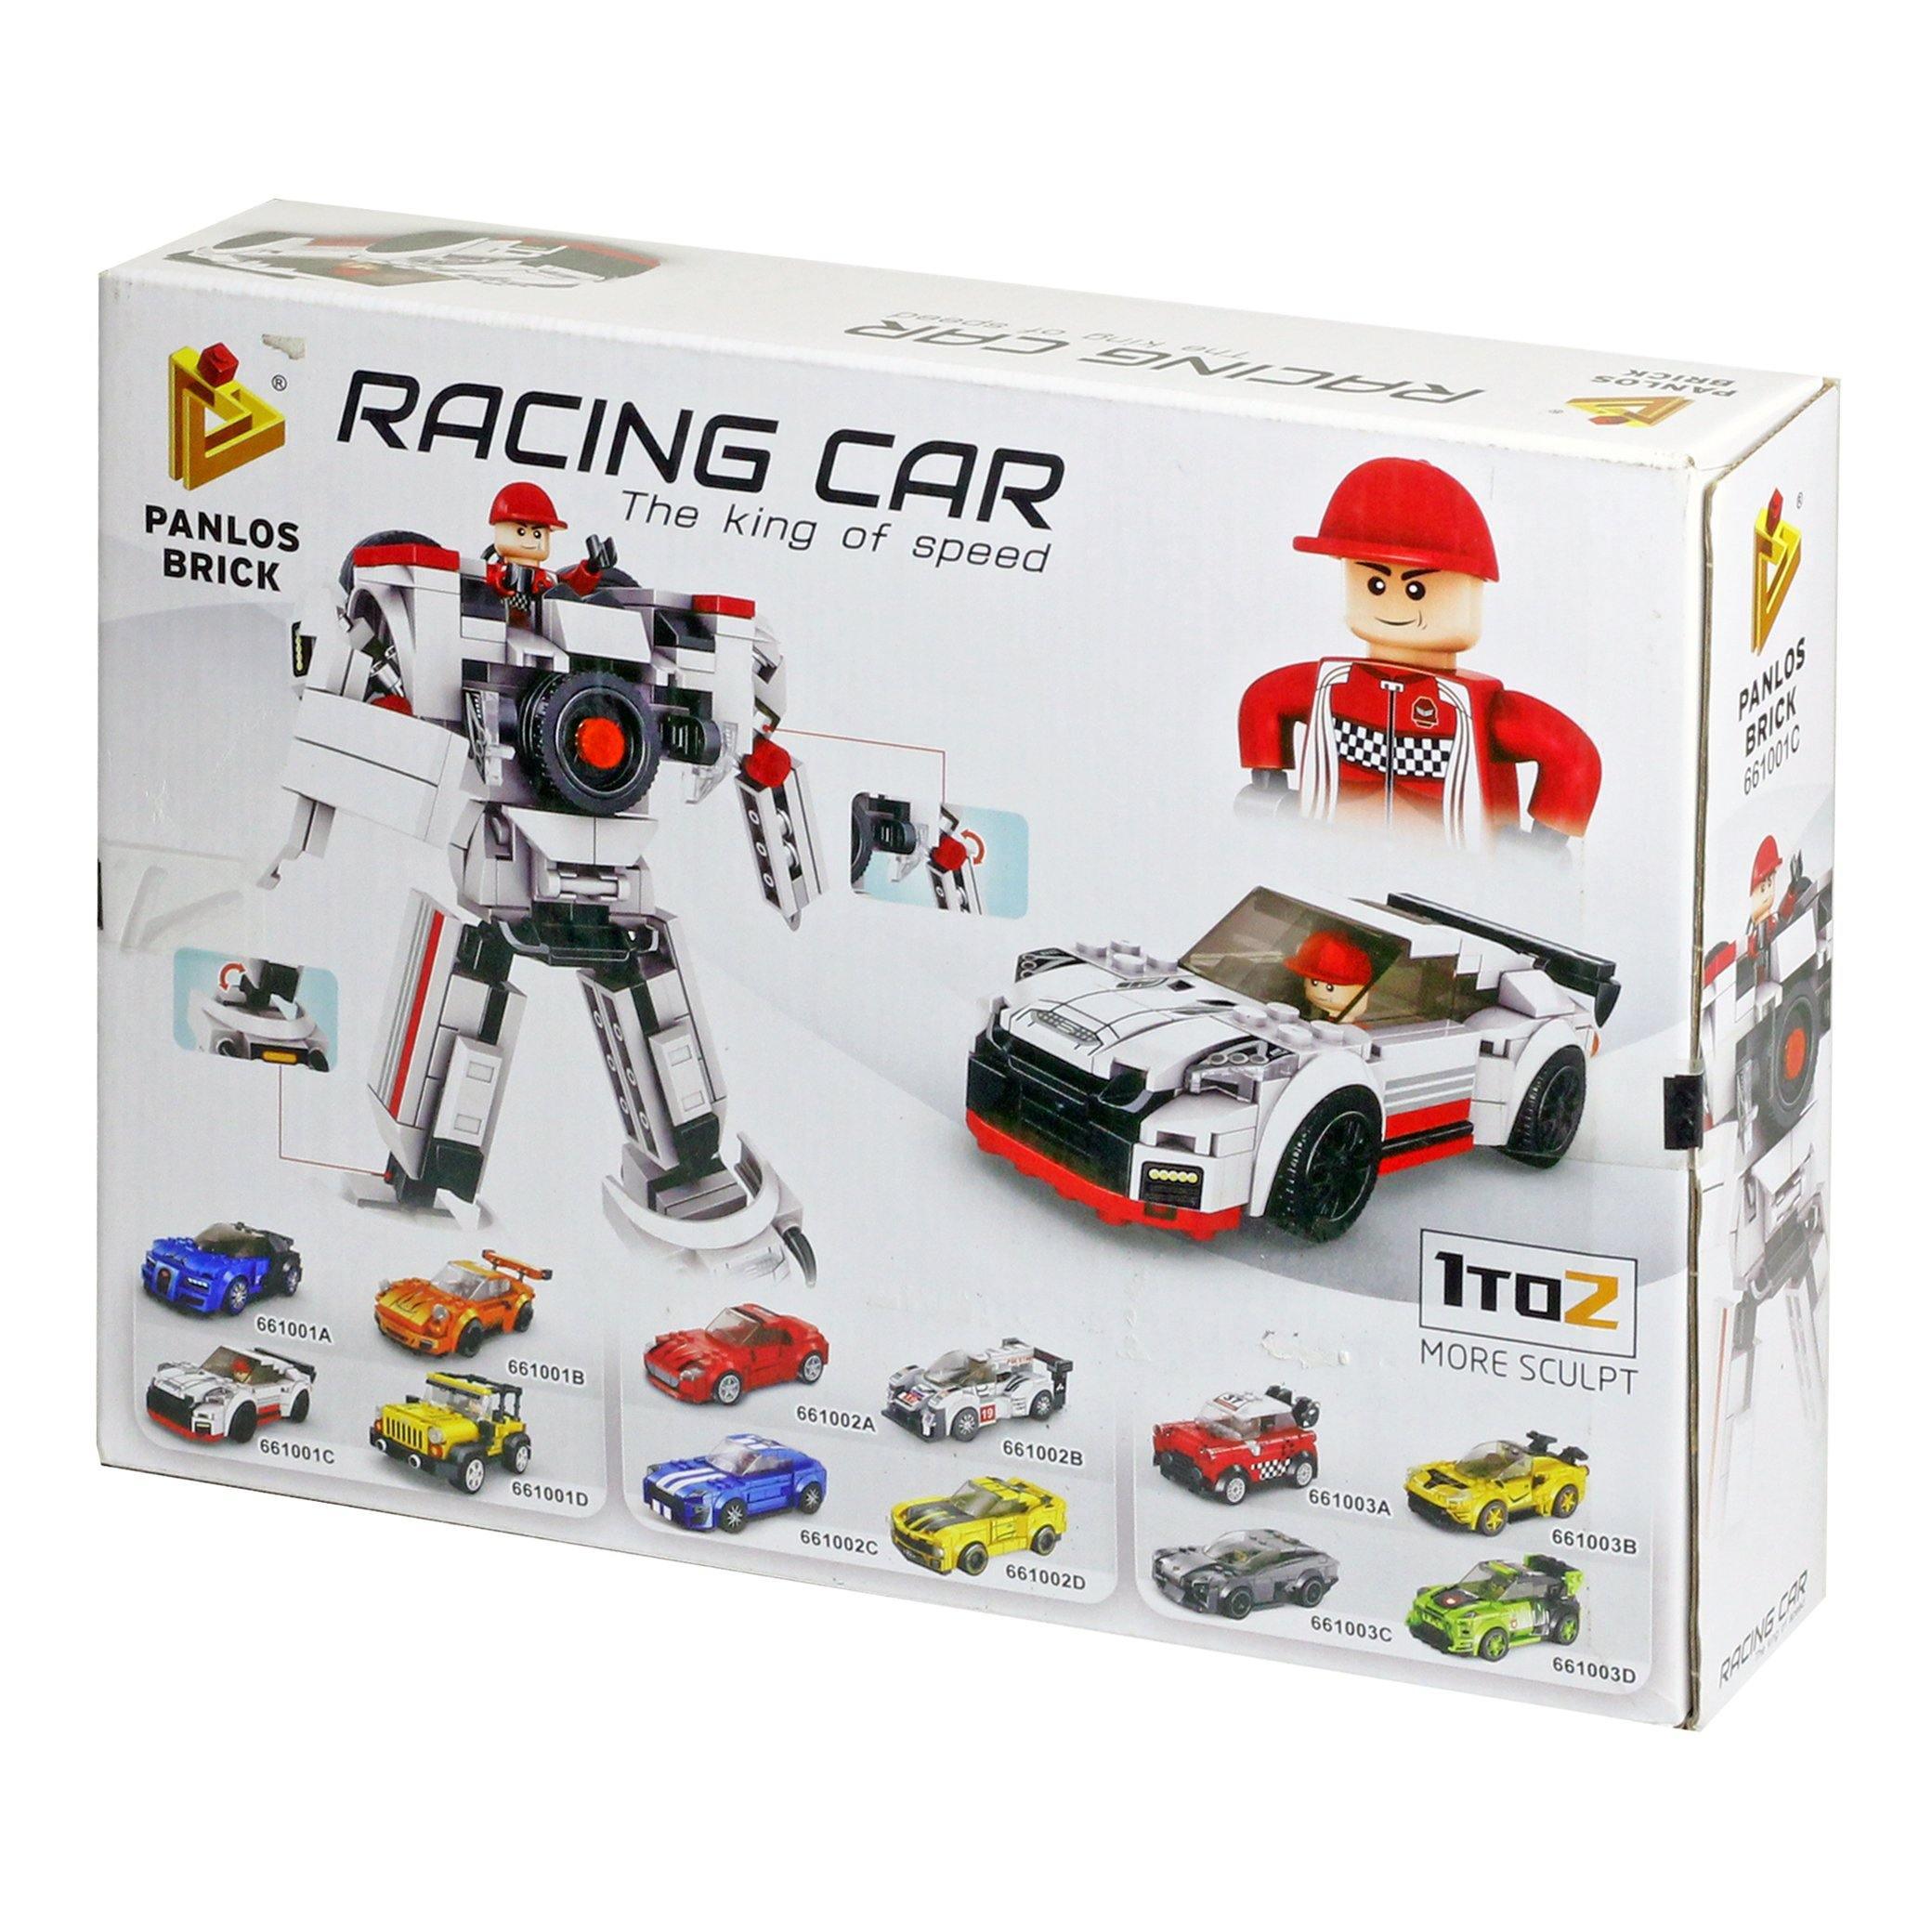 Panlos Brick Racing Car Building Blocks 230 Pieces - BumbleToys - 5-7 Years, Boys, LEGO, Toy Land